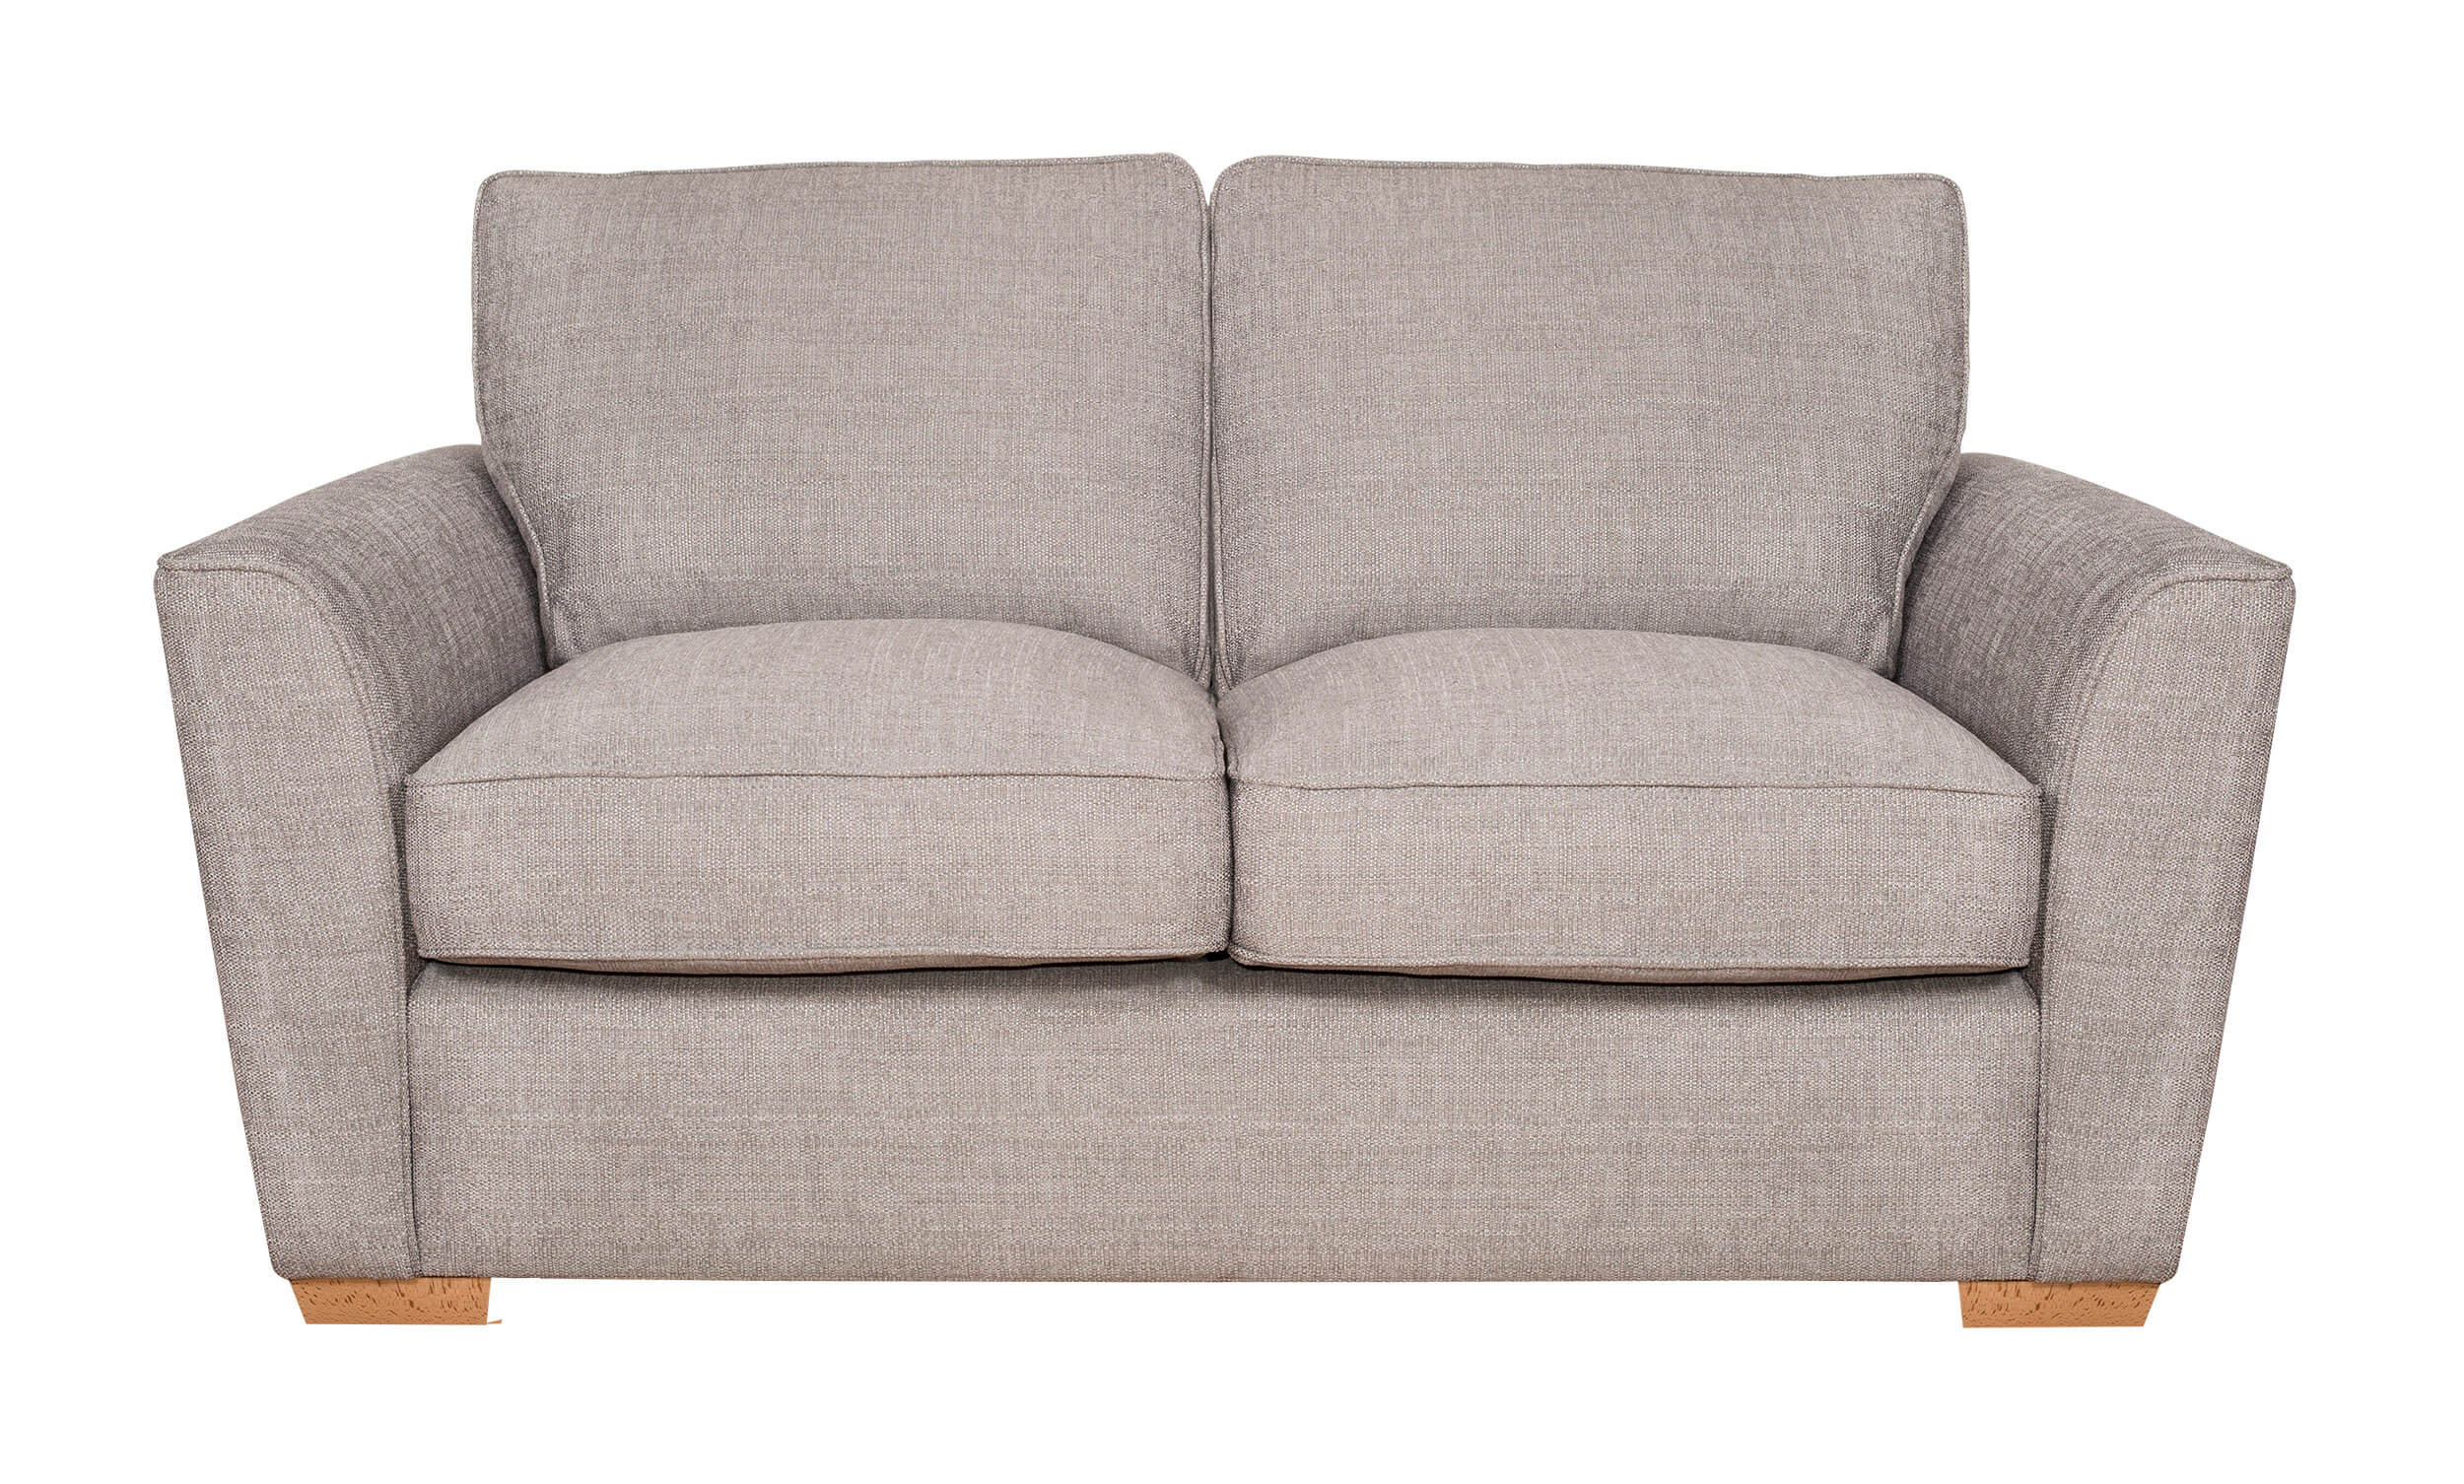 Showing image for Ellsworth sofa bed - medium